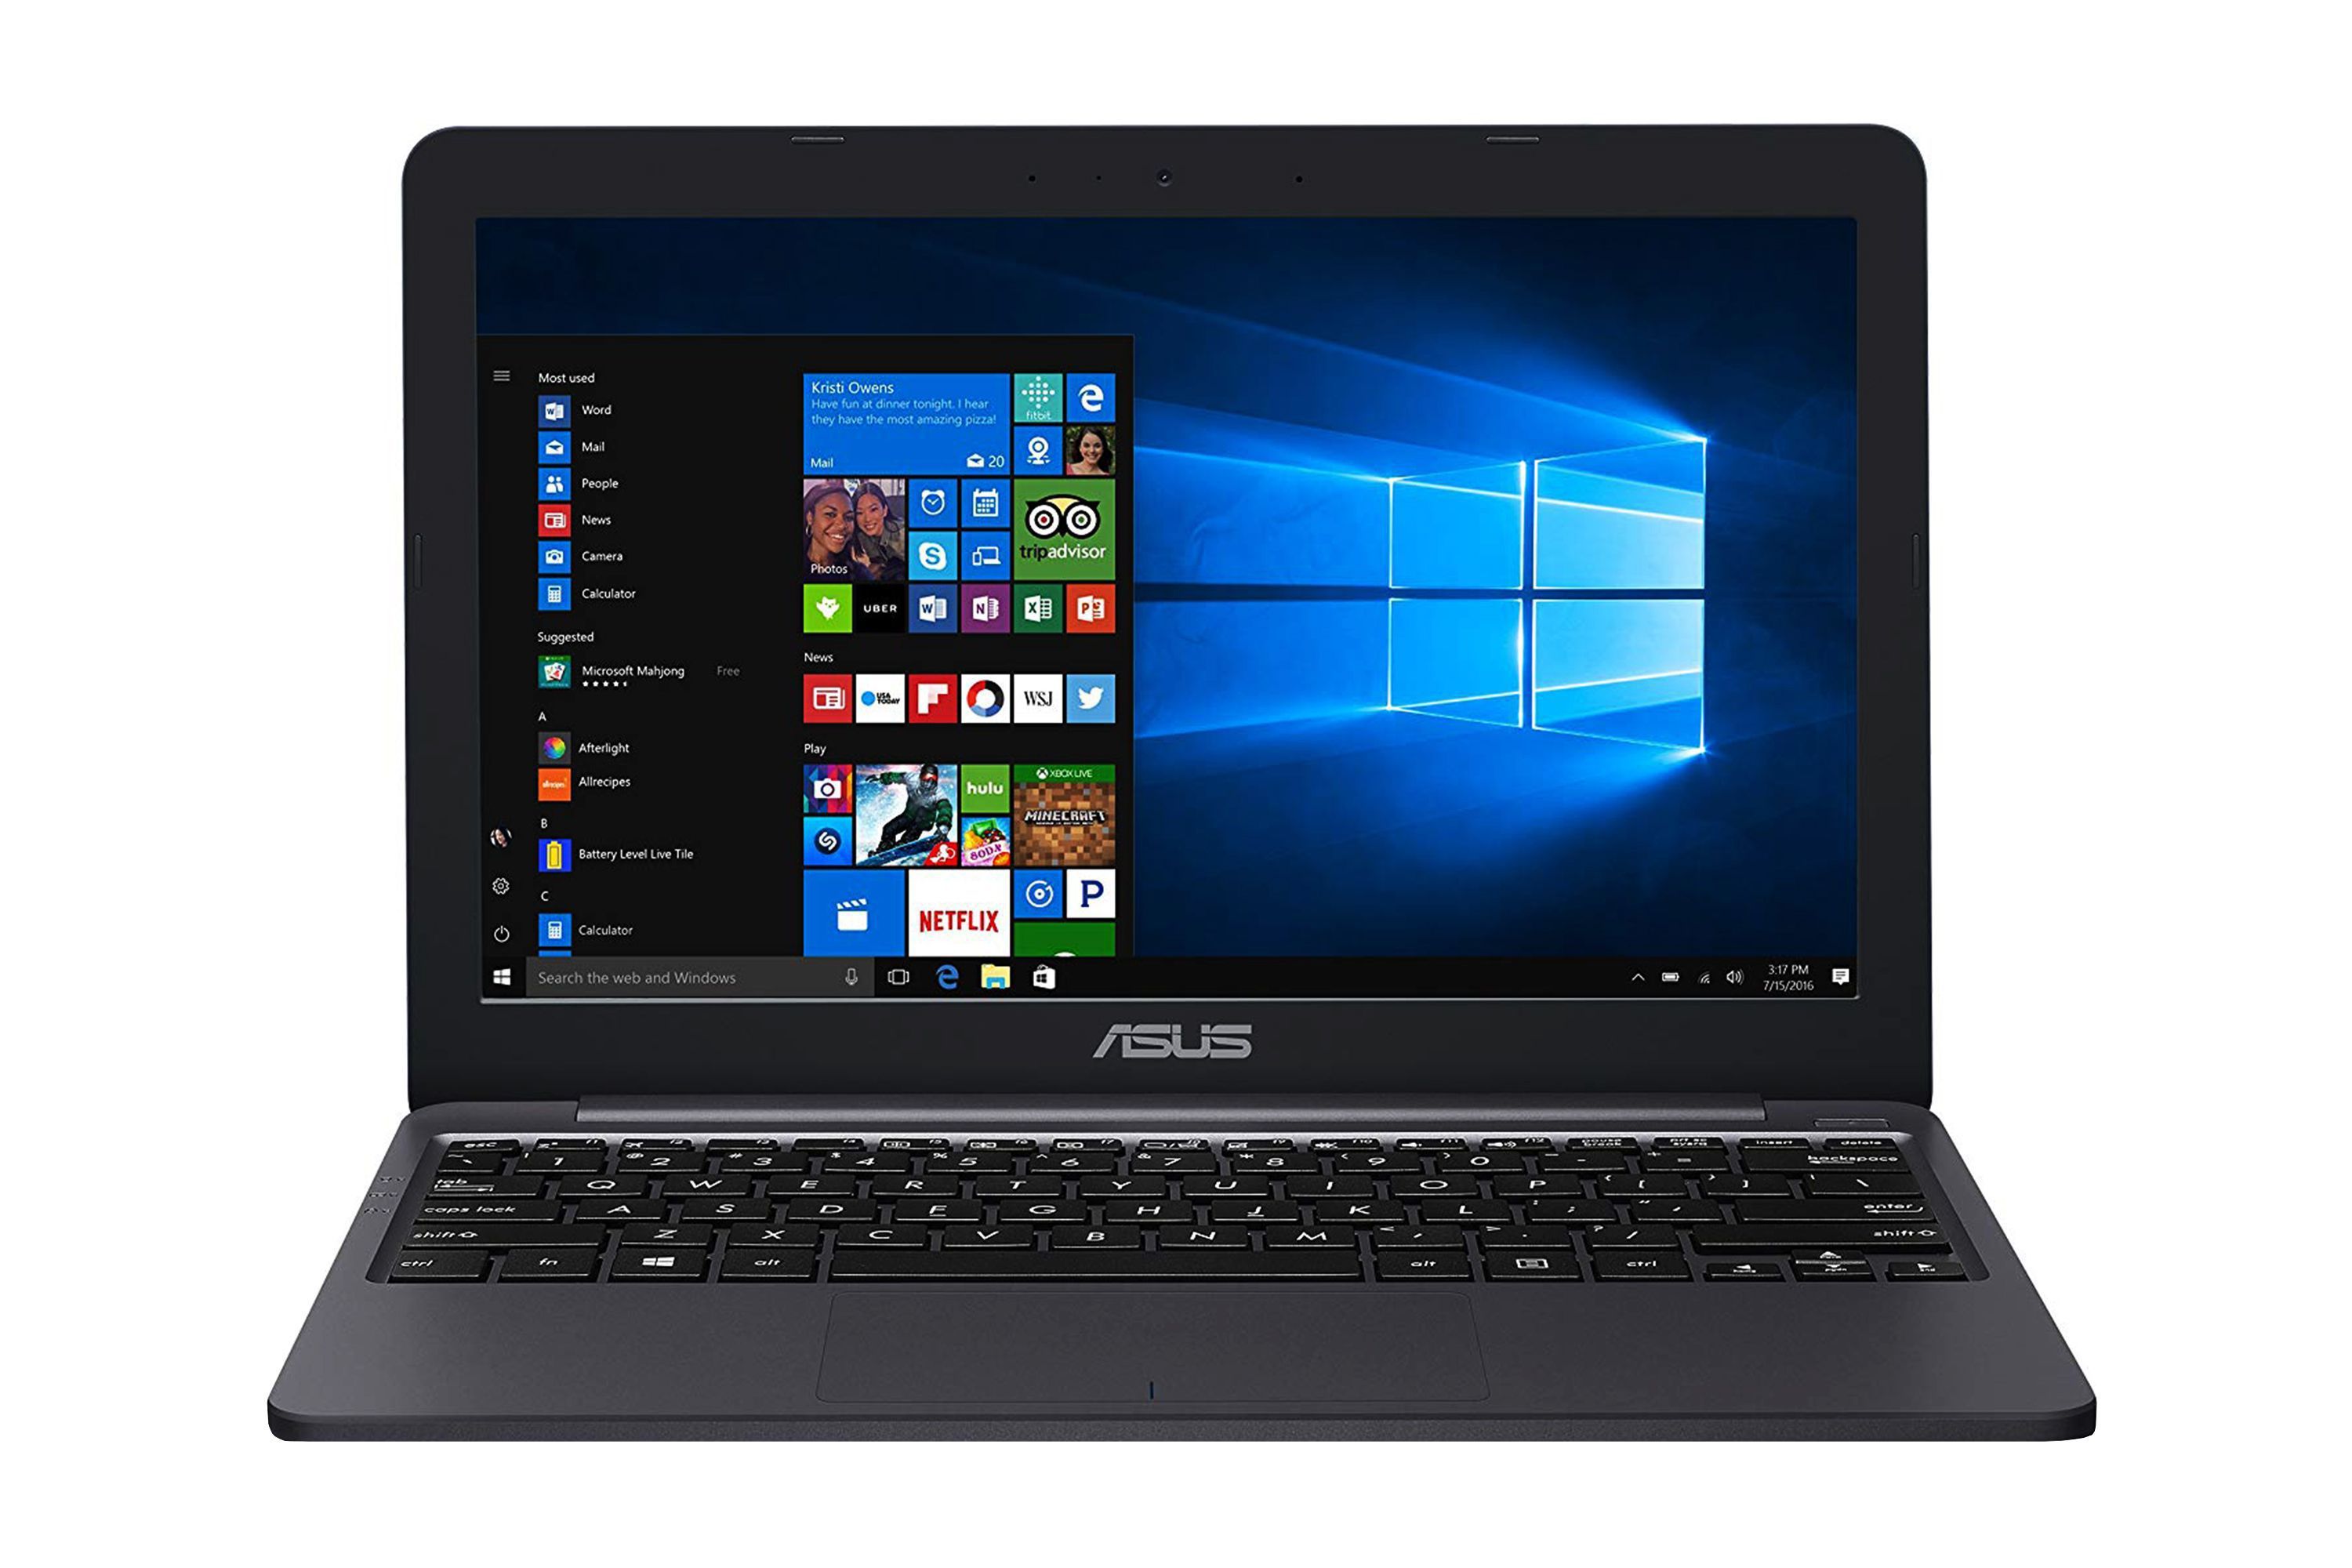 ASUS VivoBook E203MA Laptop